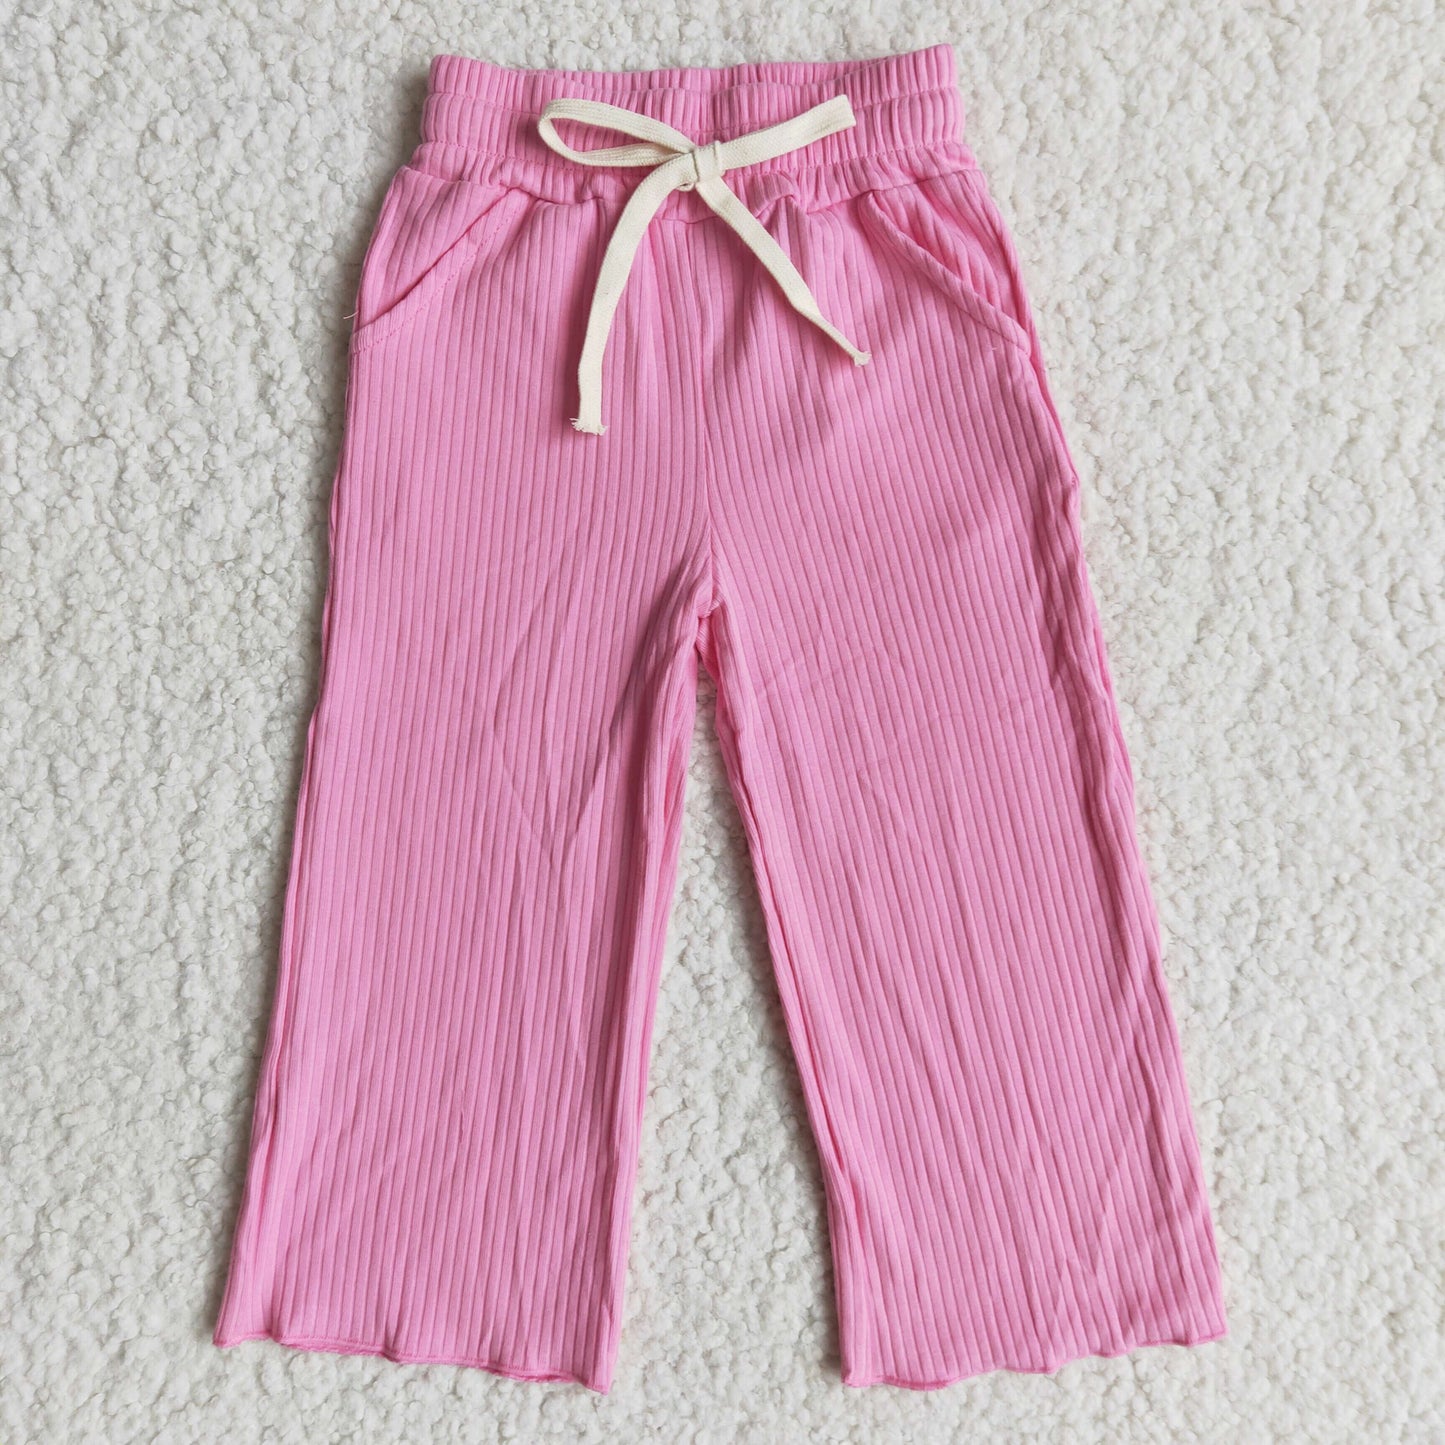 Baby girls hot pink long cotton pants